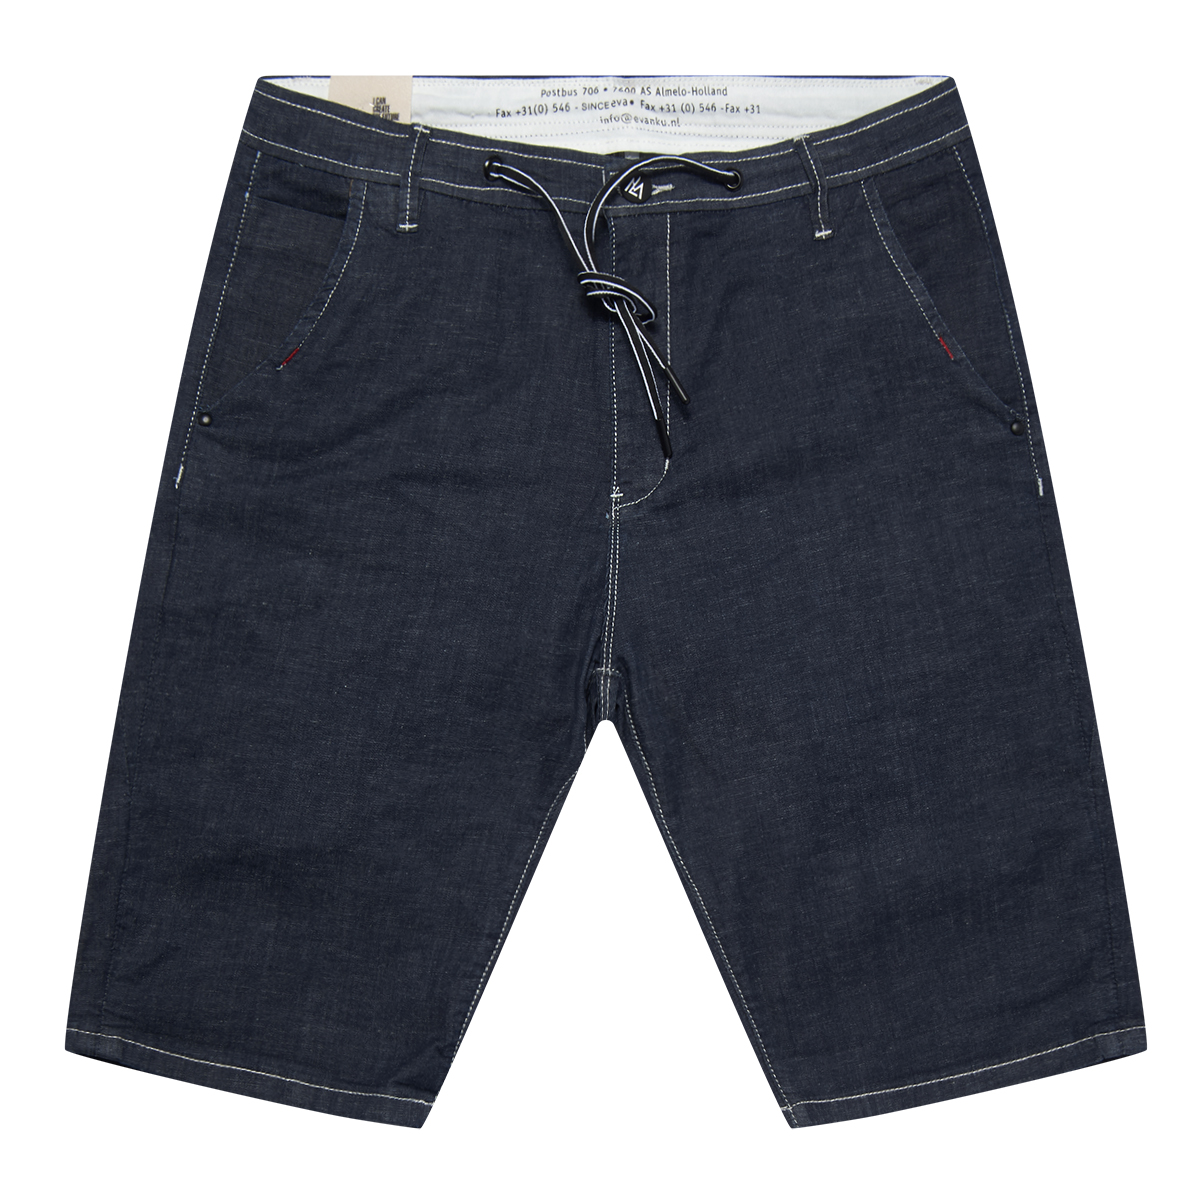 HELLEN&WOODY/H&W Fashion Casual Jeans Summer Men's Regular-Fit Black Denim Short 1601